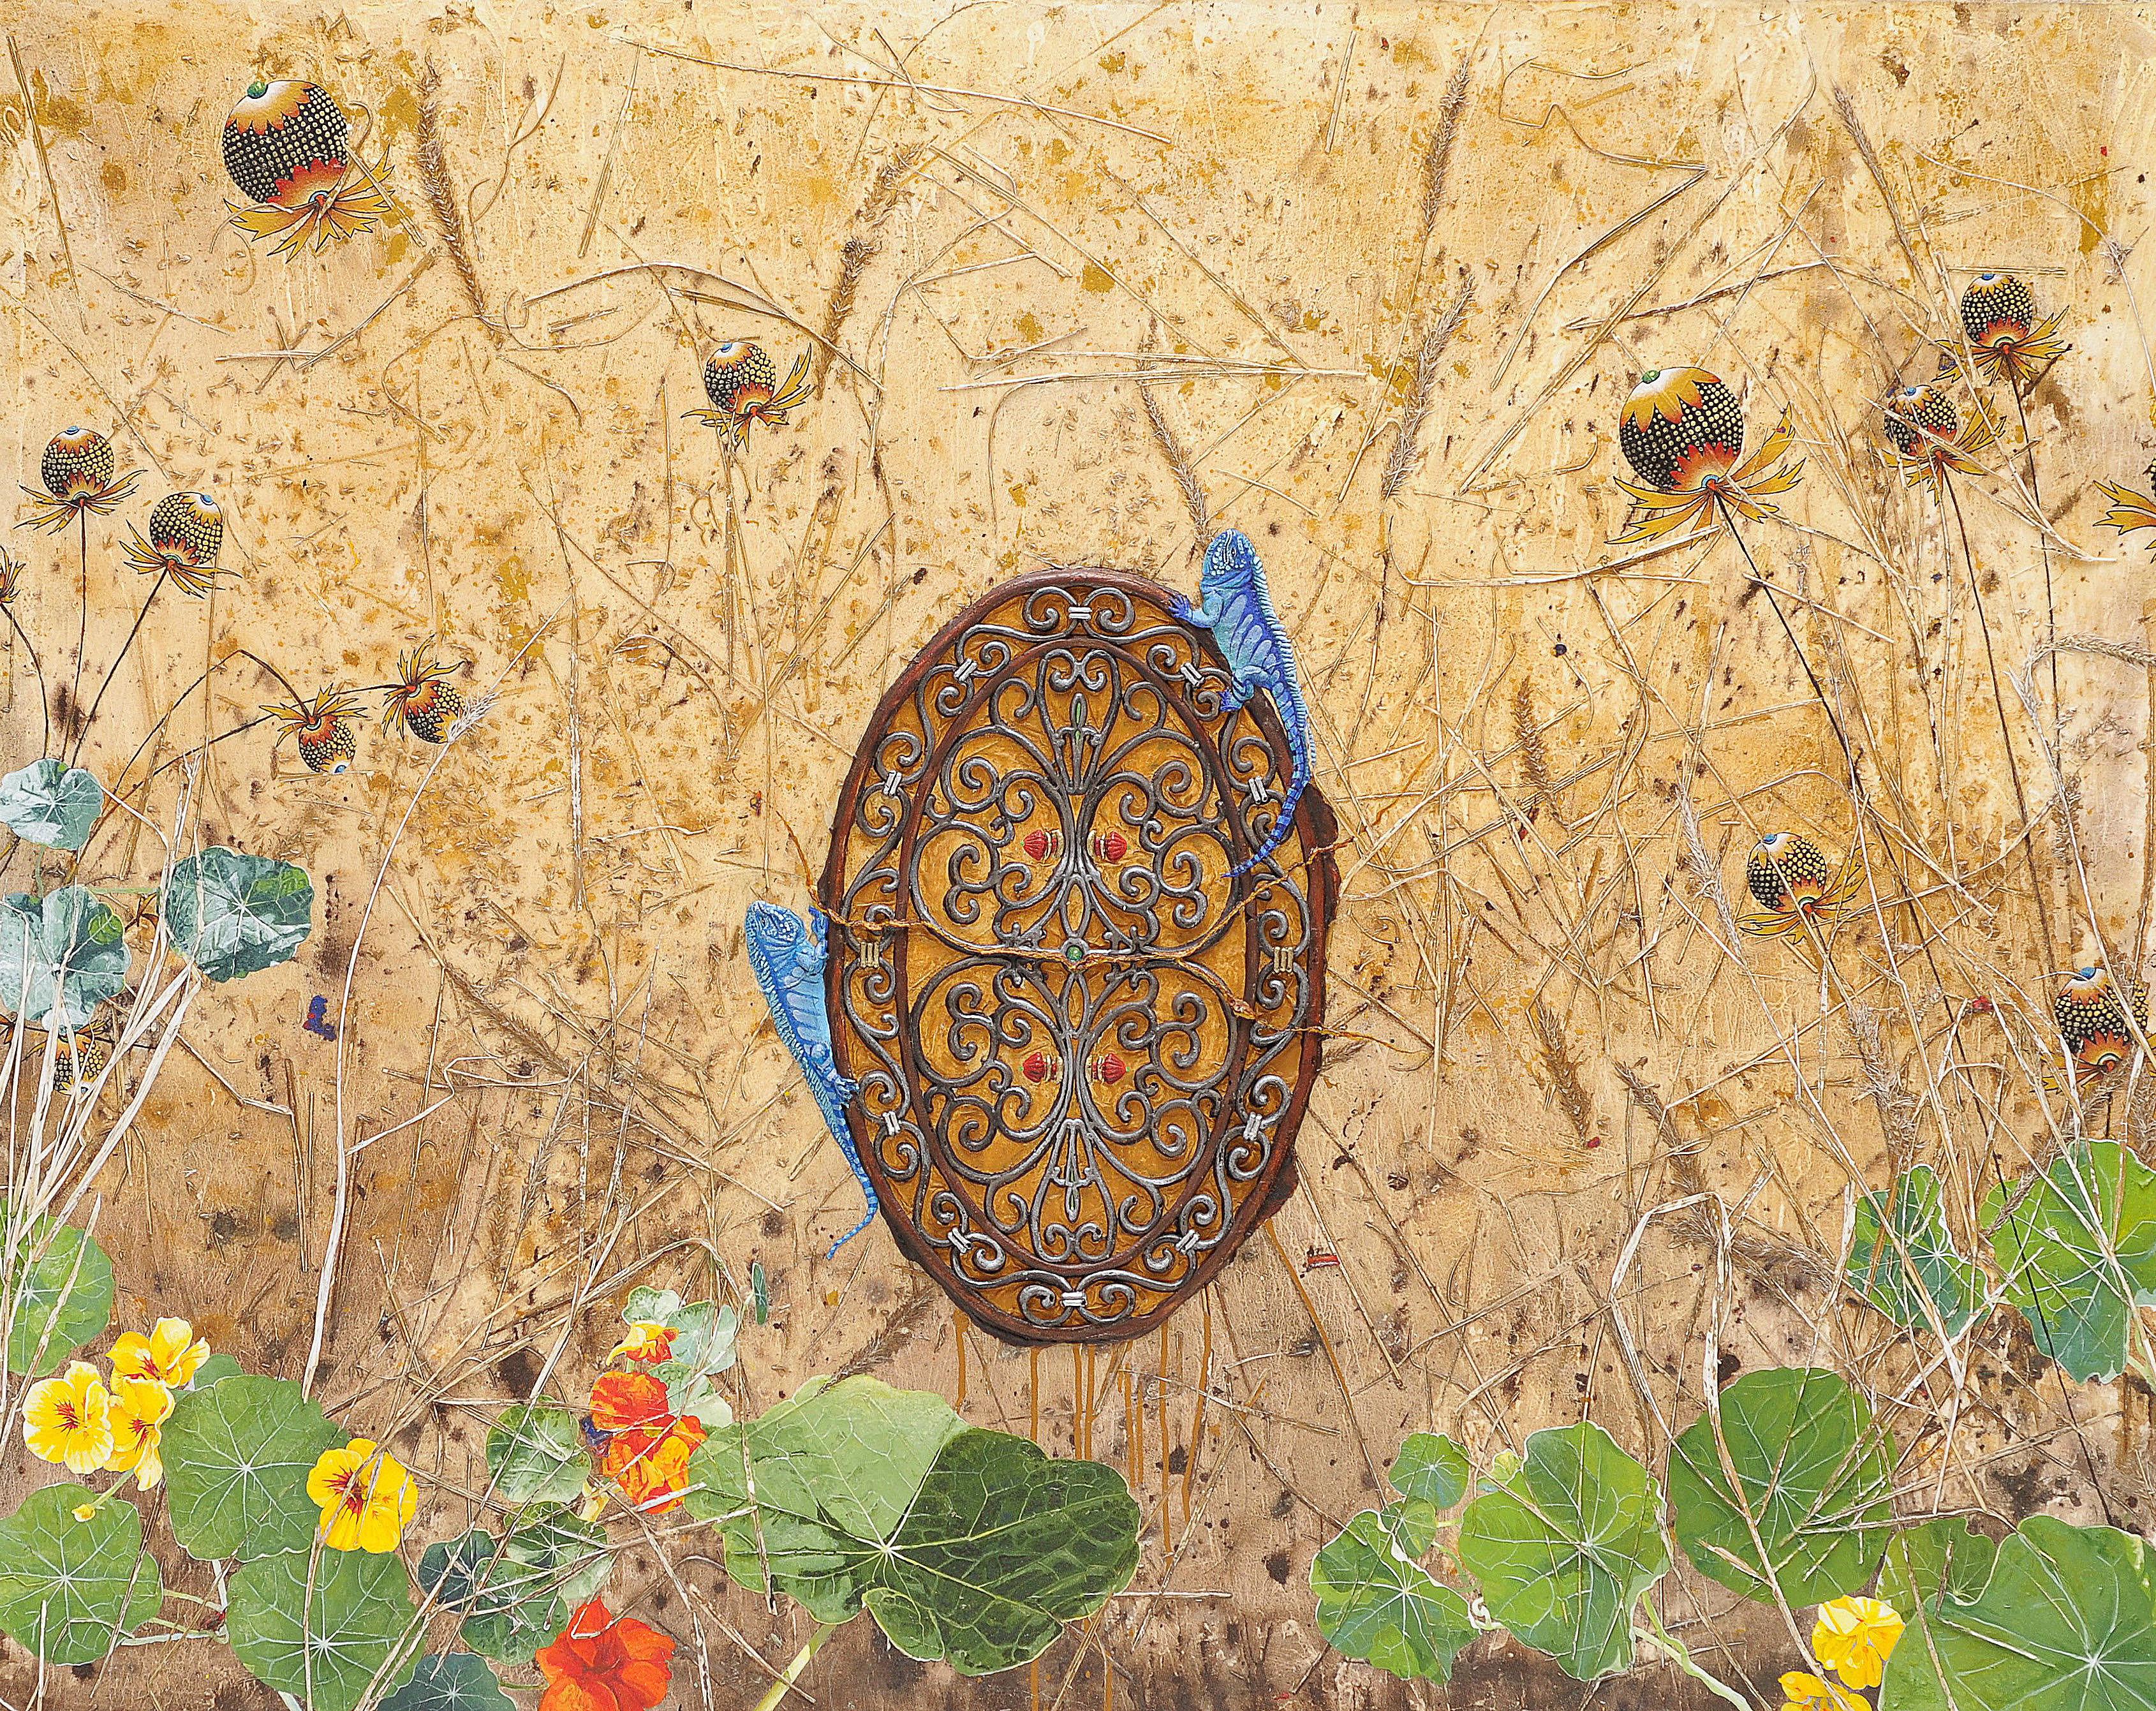 Dinner Date, acrylic painting depicting blue lizards, nasturtium, dry grass - Mixed Media Art by Ben Darby